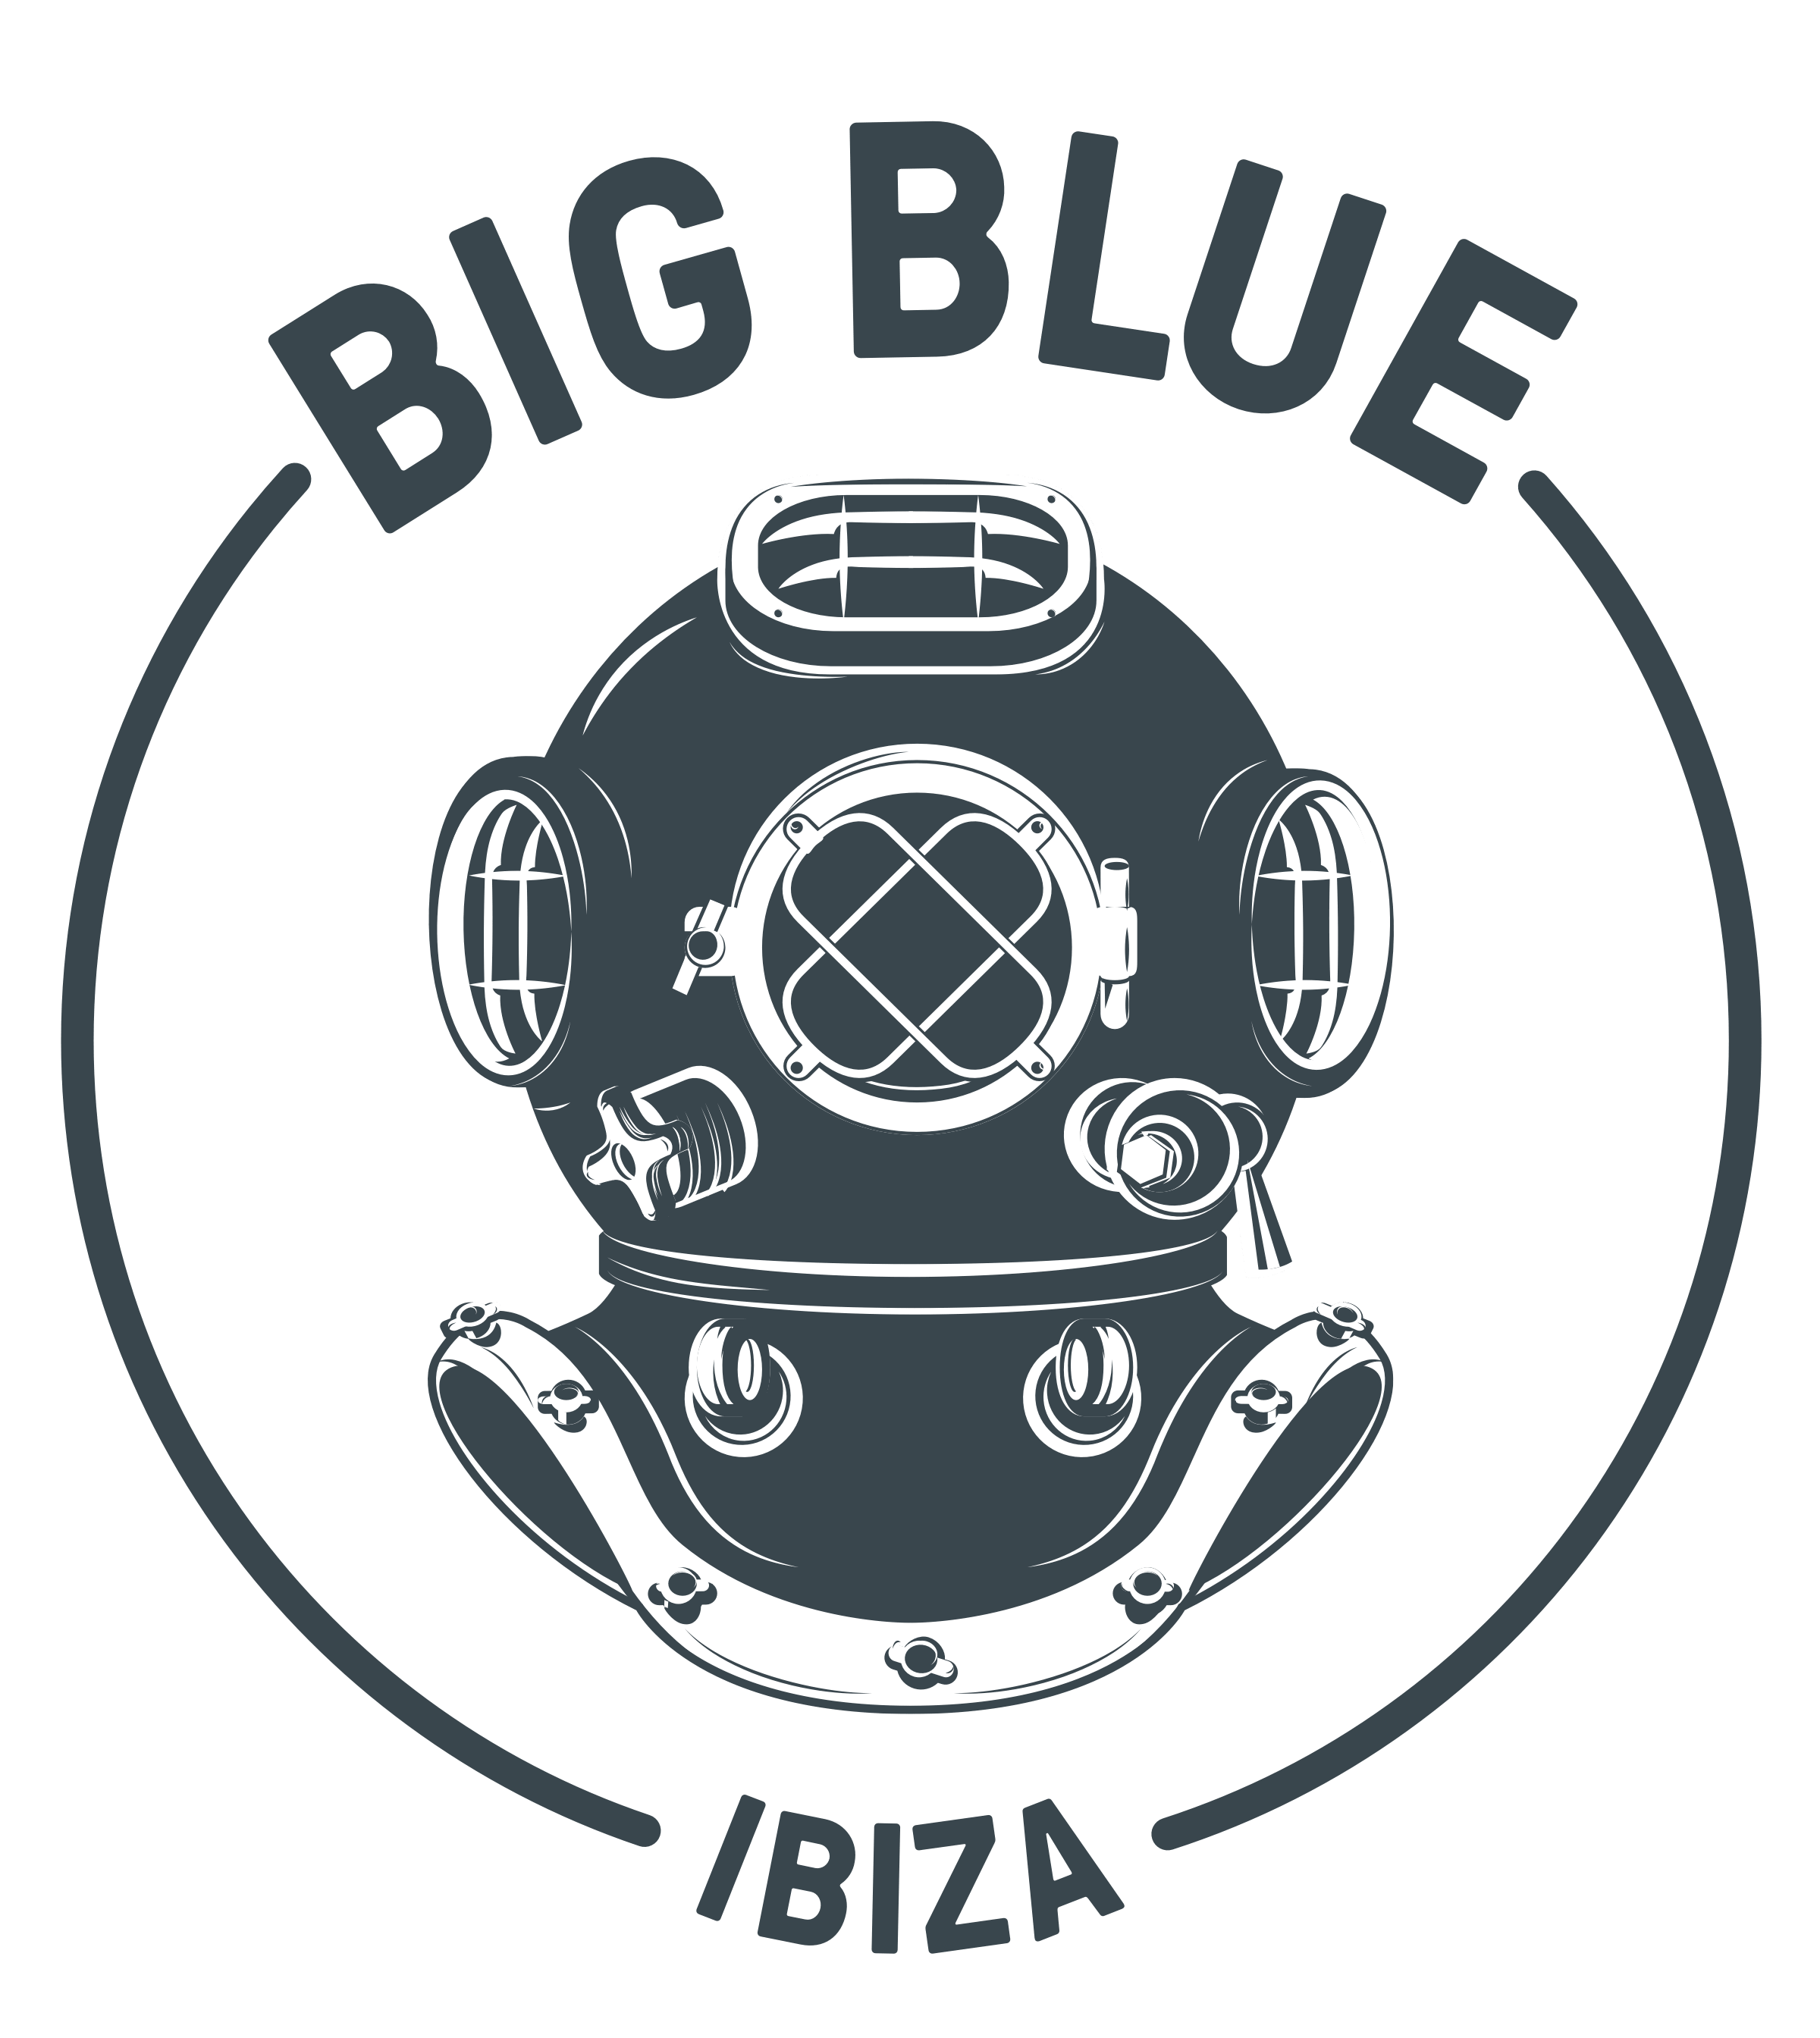 Big blue Ibiza logo